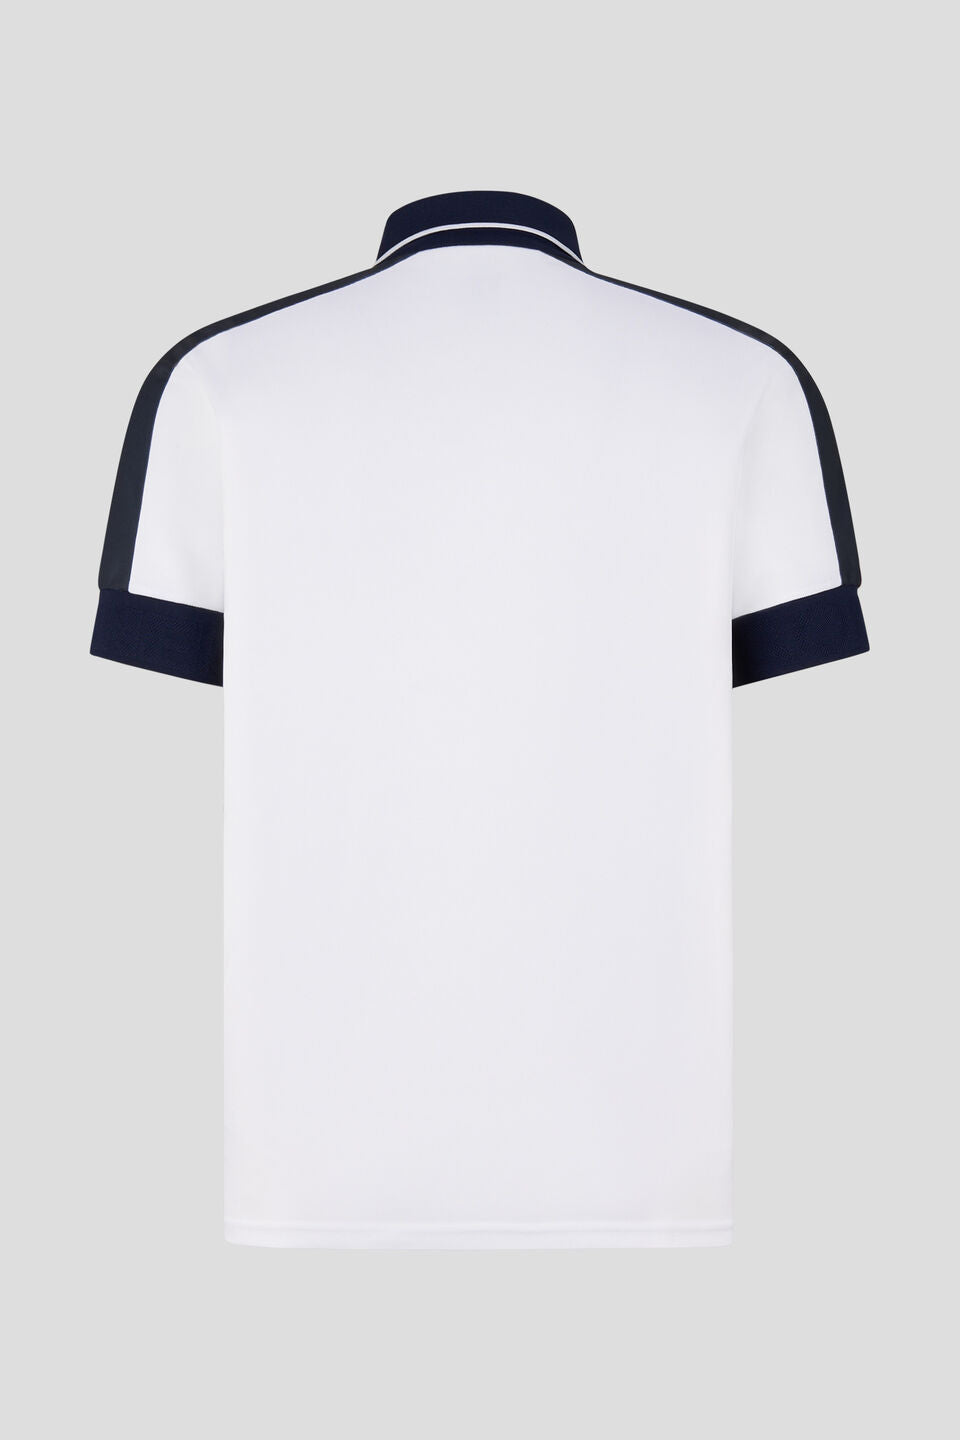 Bogner Sport Claudius Polo Shirt